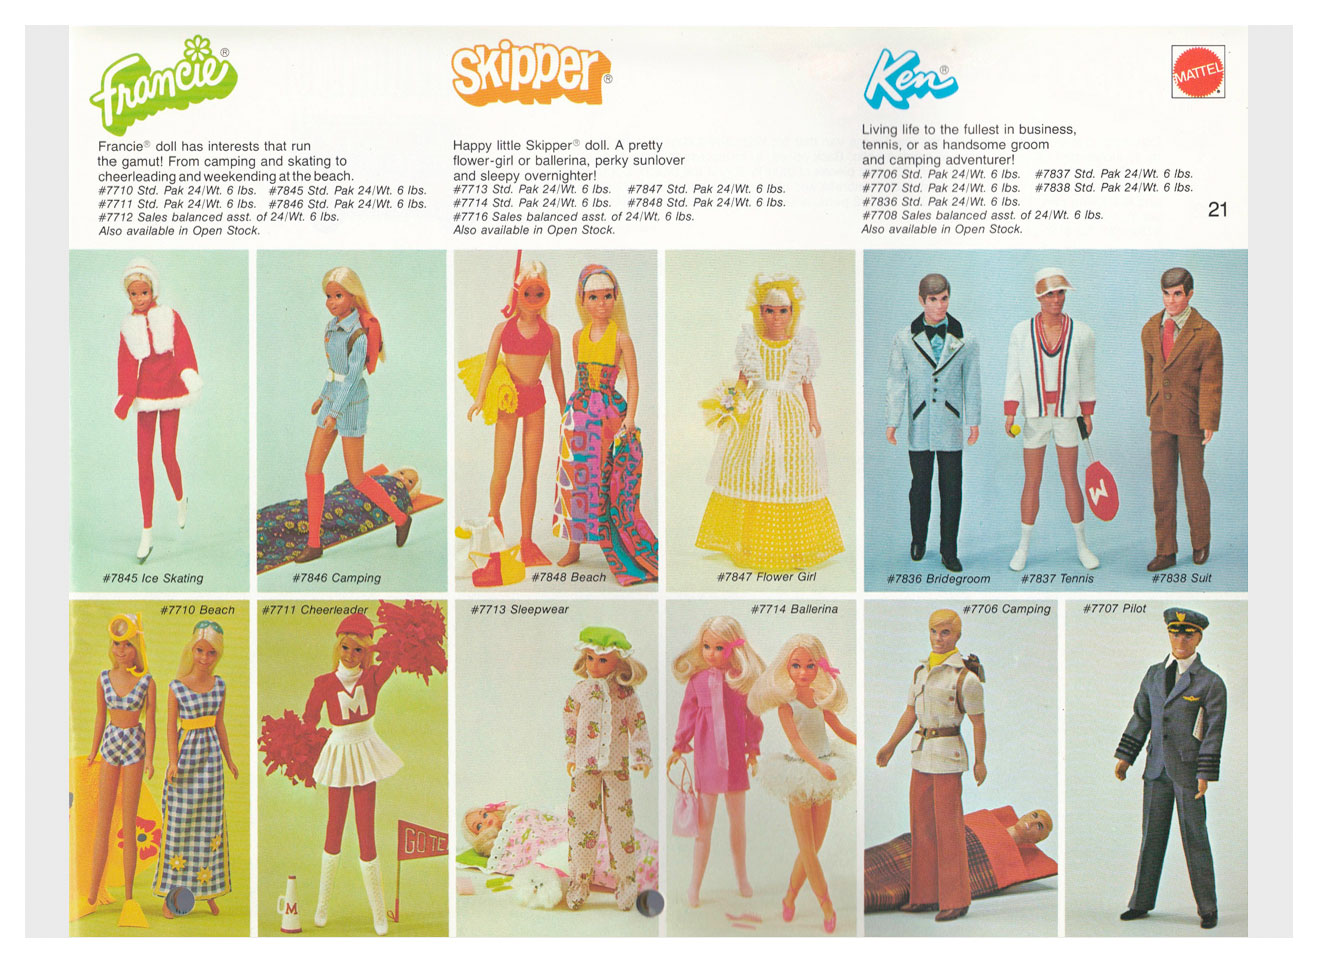 1974 Mattel Toys catalogue